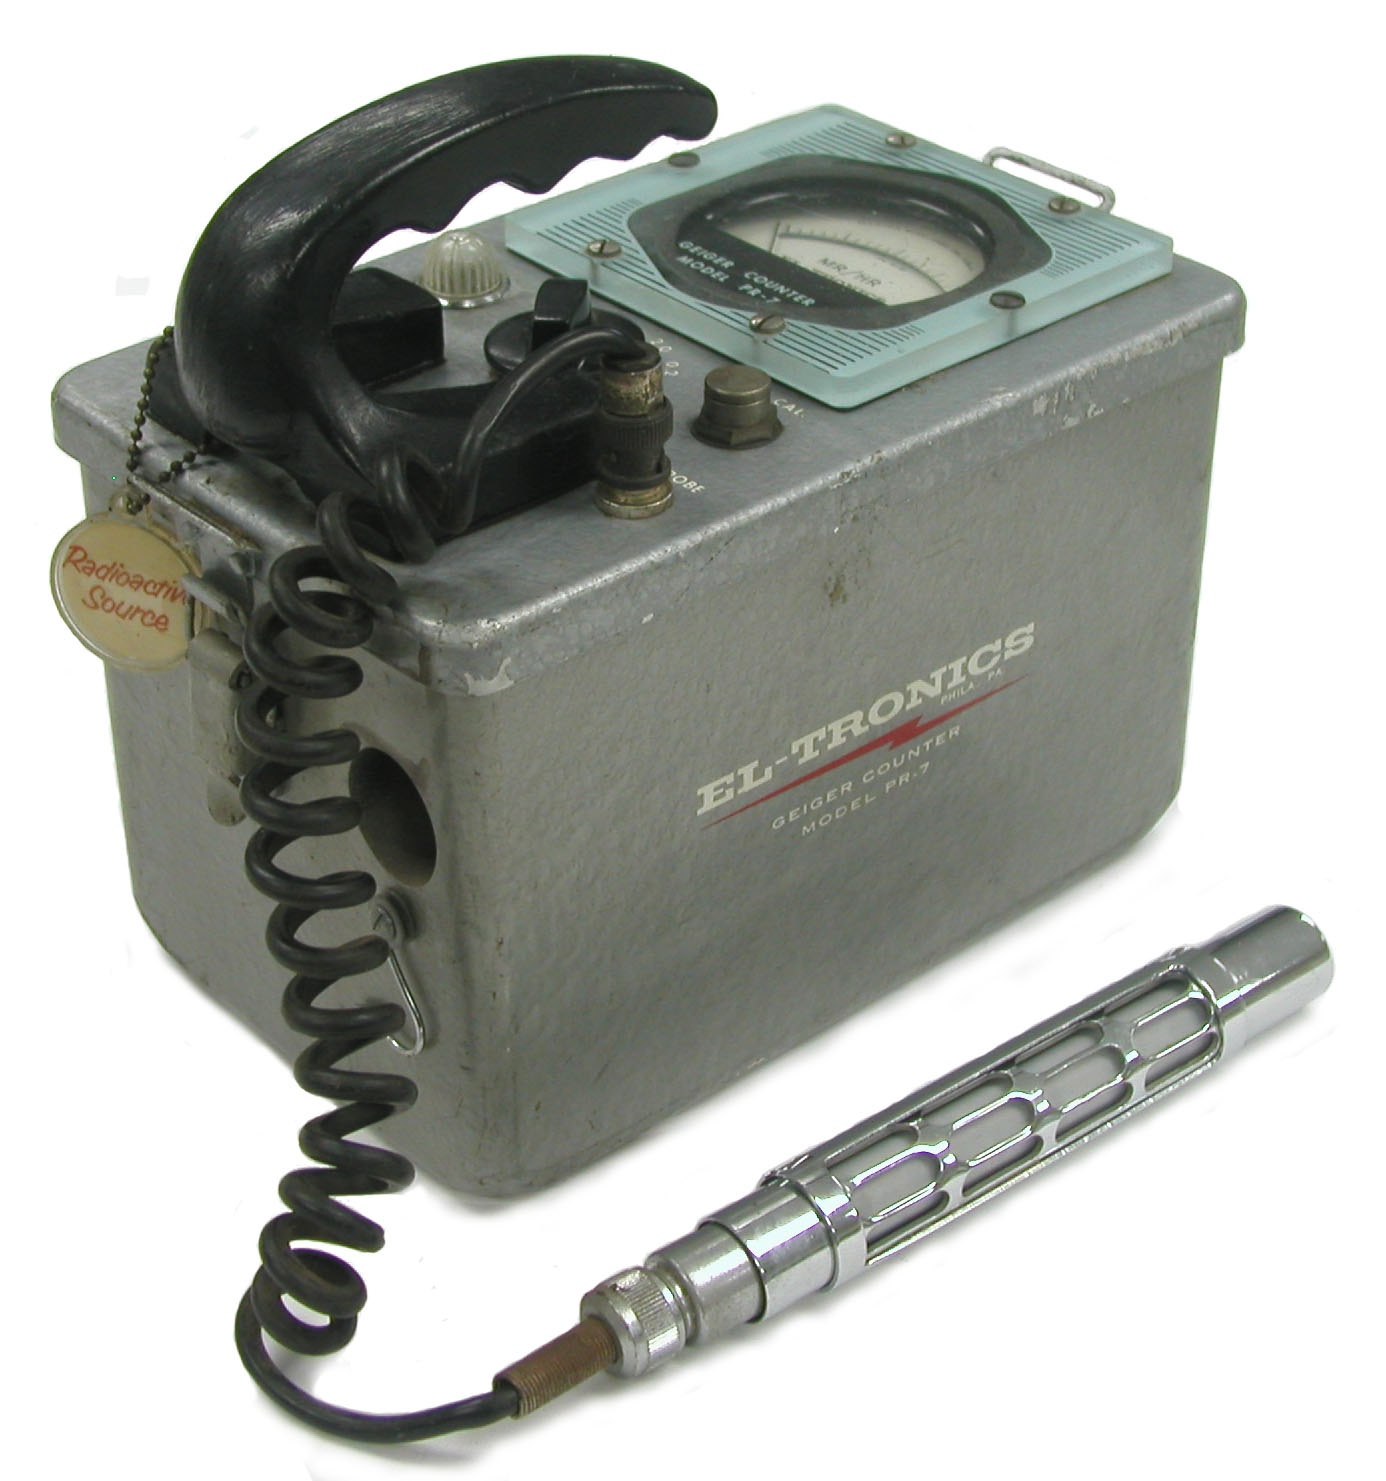 El-Tronics PR-7 GM Survey Meter (ca. 1955)